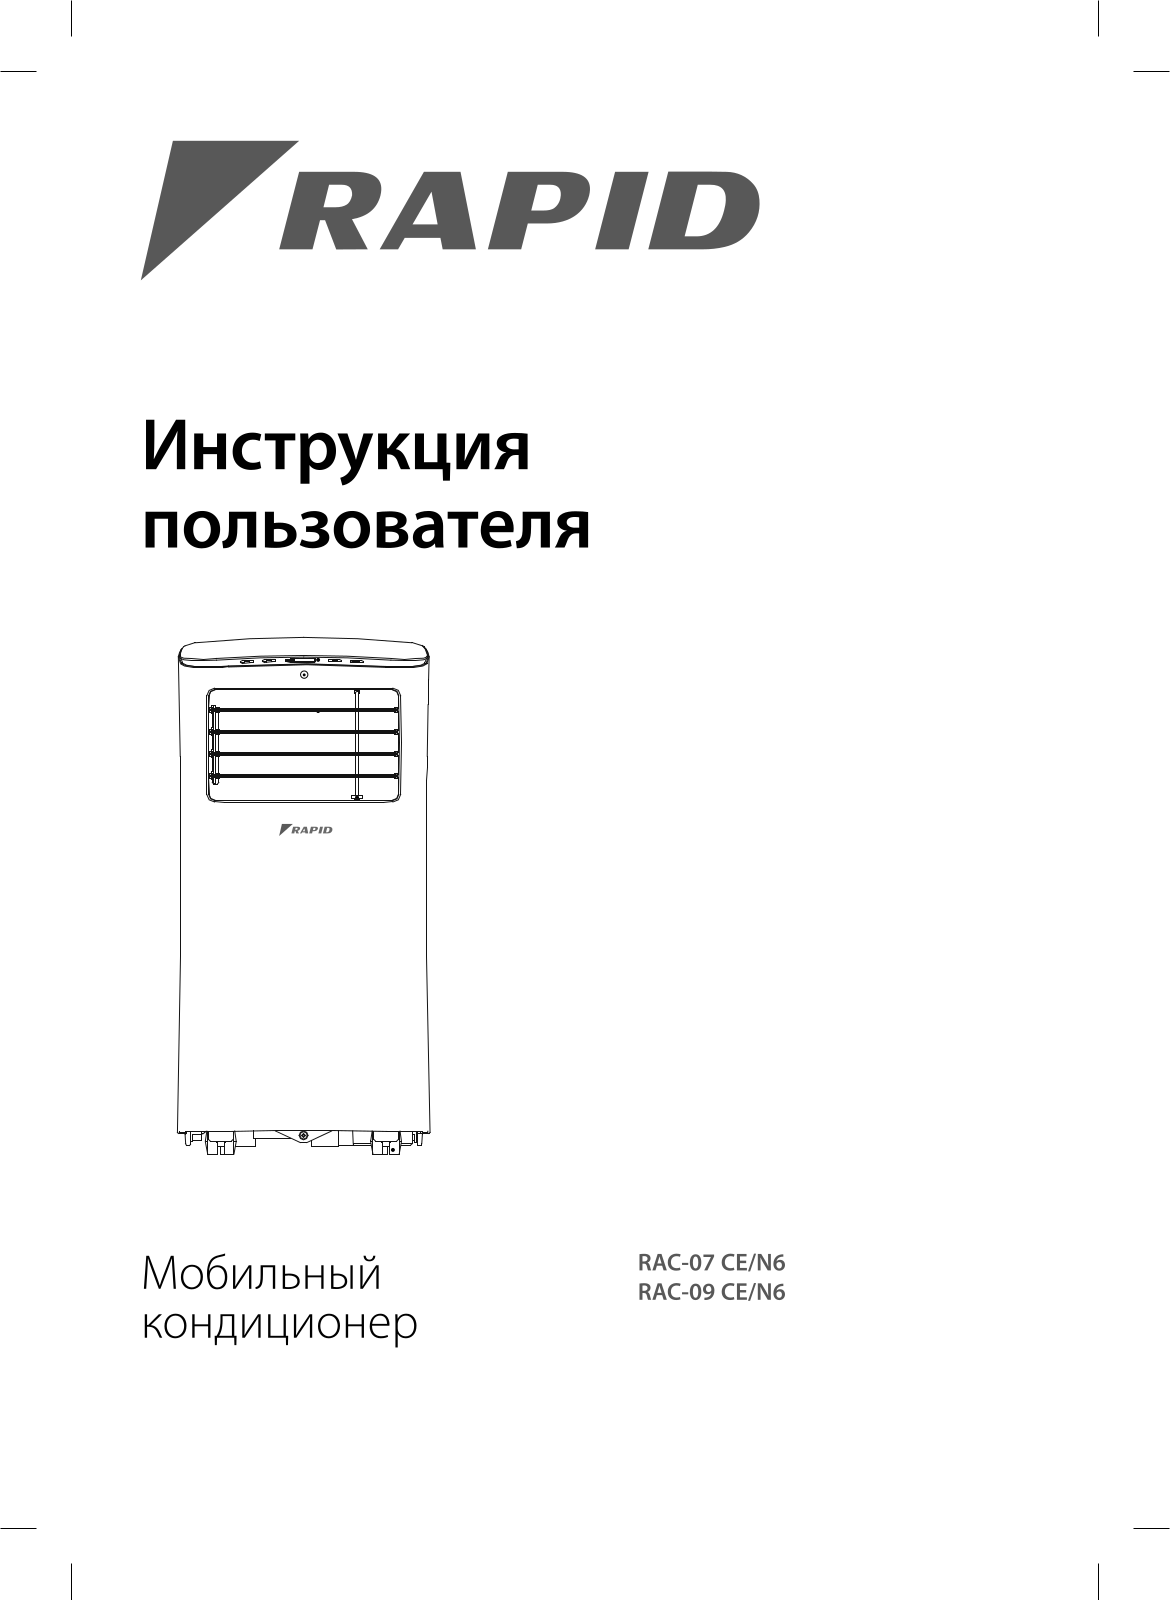 Rapid RAC-07 CE/N6 User Manual